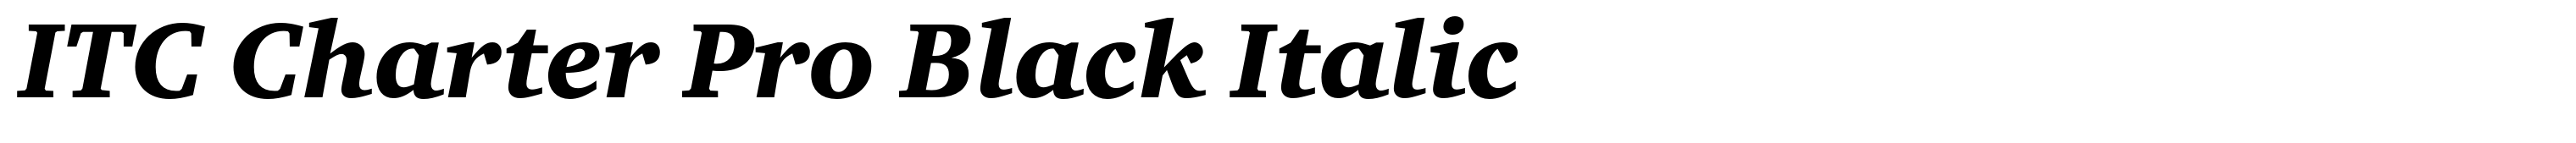 ITC Charter Pro Black Italic